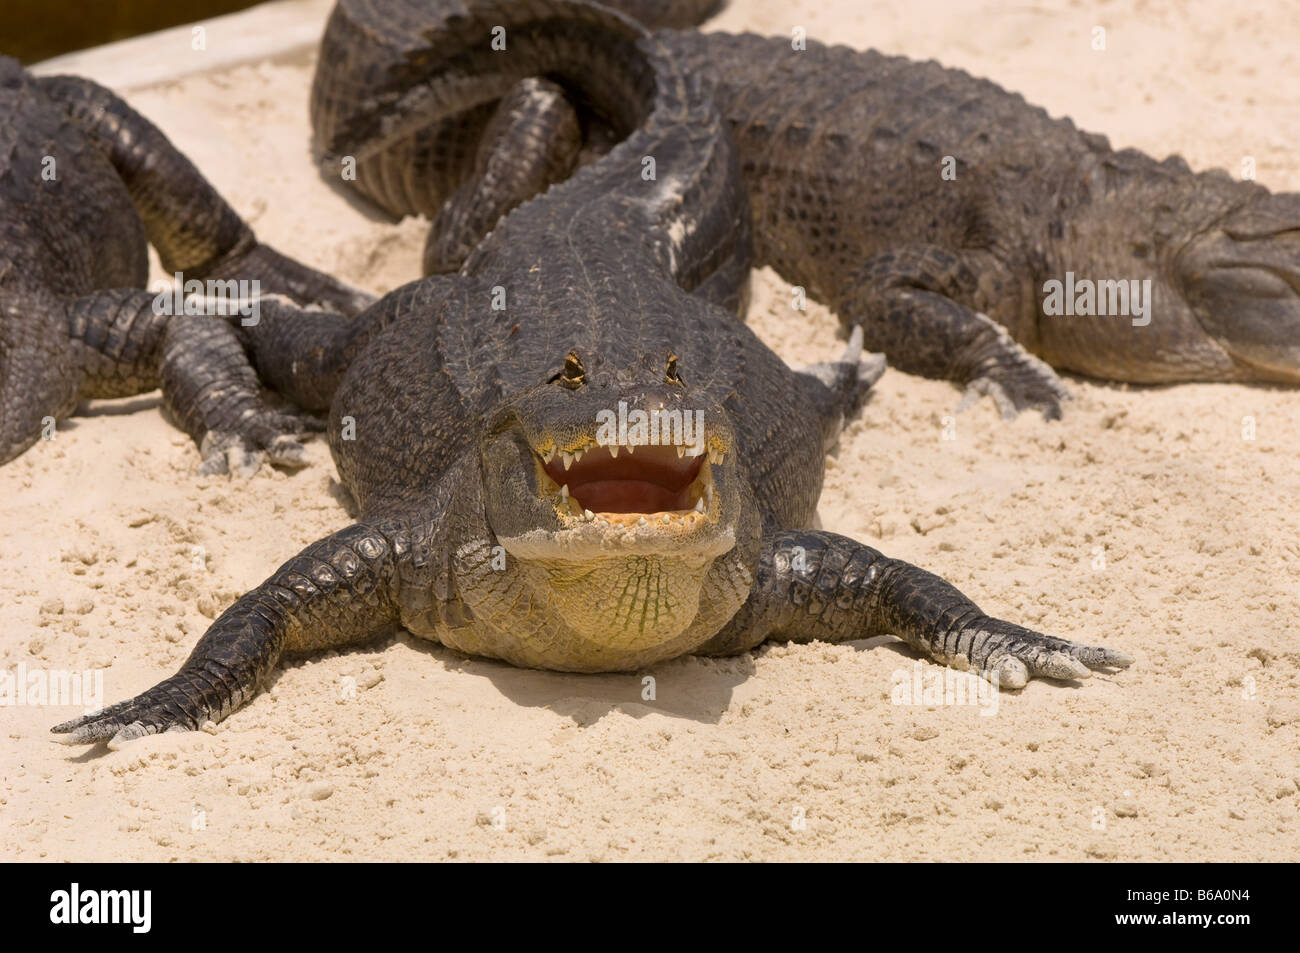 Gatorland Kissimmee Orlando Florida Stati Uniti d'America Foto Stock